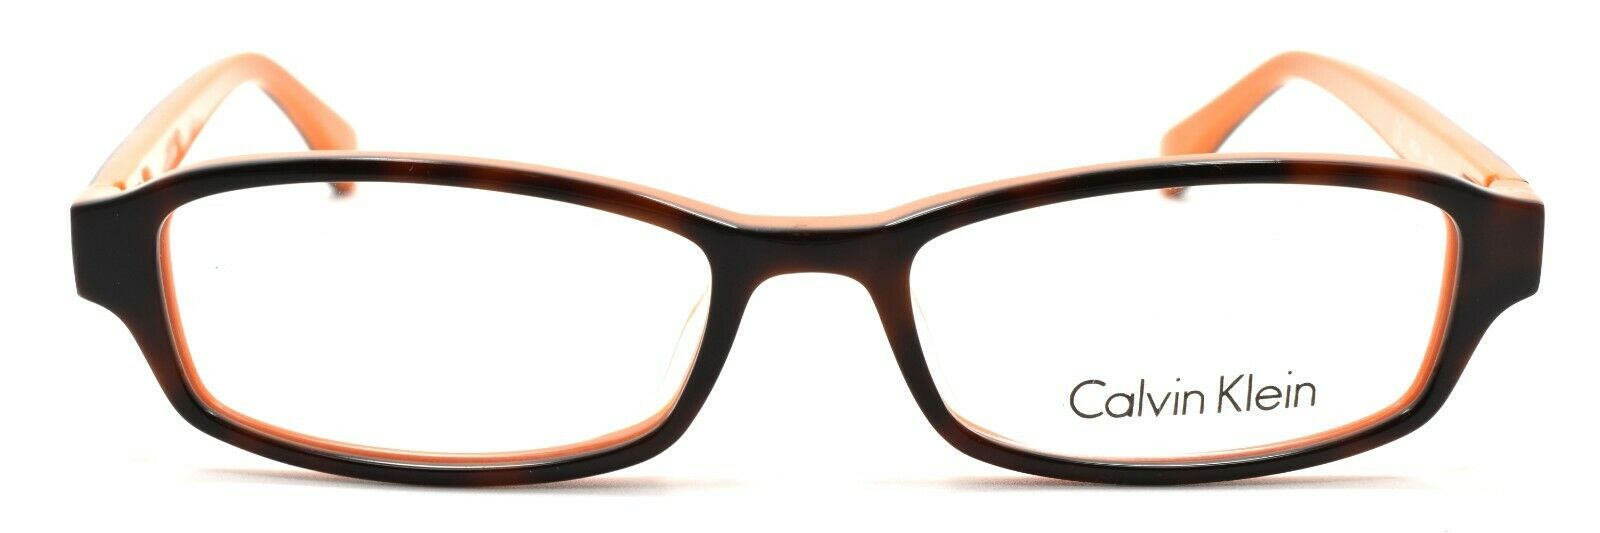 2-Calvin Klein CK5865 506 Eyeglasses Frames PETITE 48-16-135 Havana / Orange-750779076767-IKSpecs